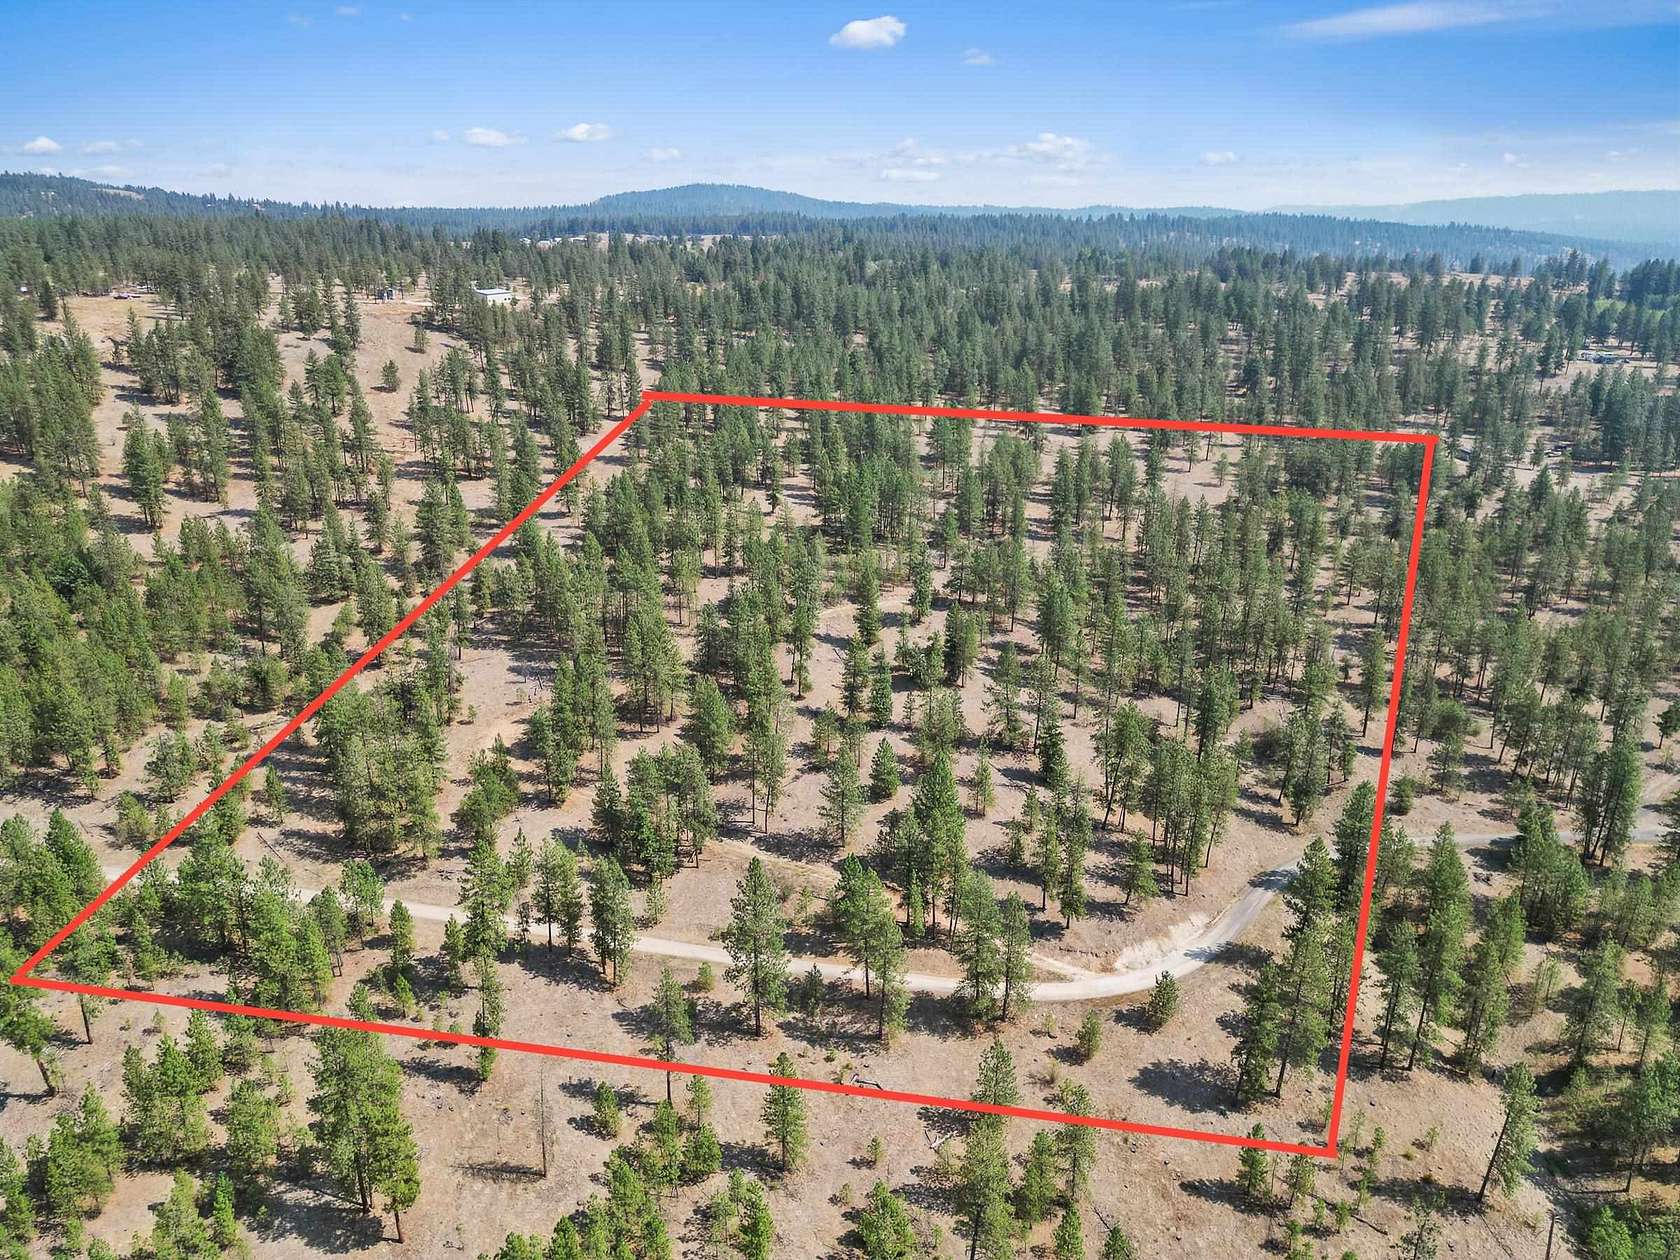 20 Acres of Land for Sale in Nine Mile Falls, Washington